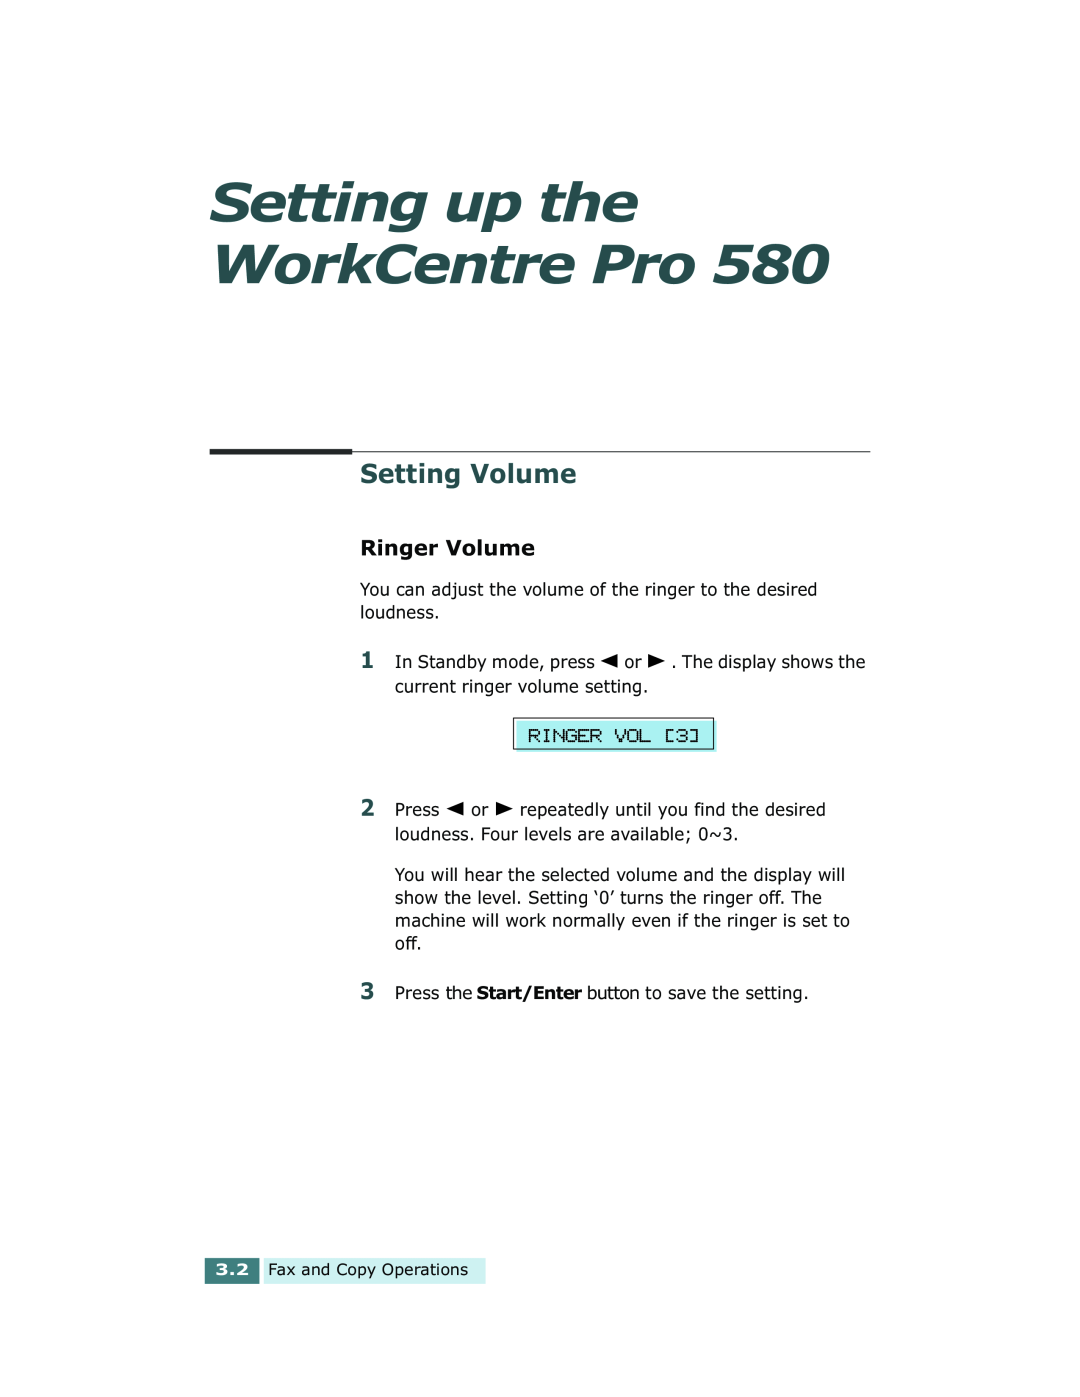 Xerox Pro 580 manual Setting up the WorkCentre Pro, Setting Volume, Ringer Volume 